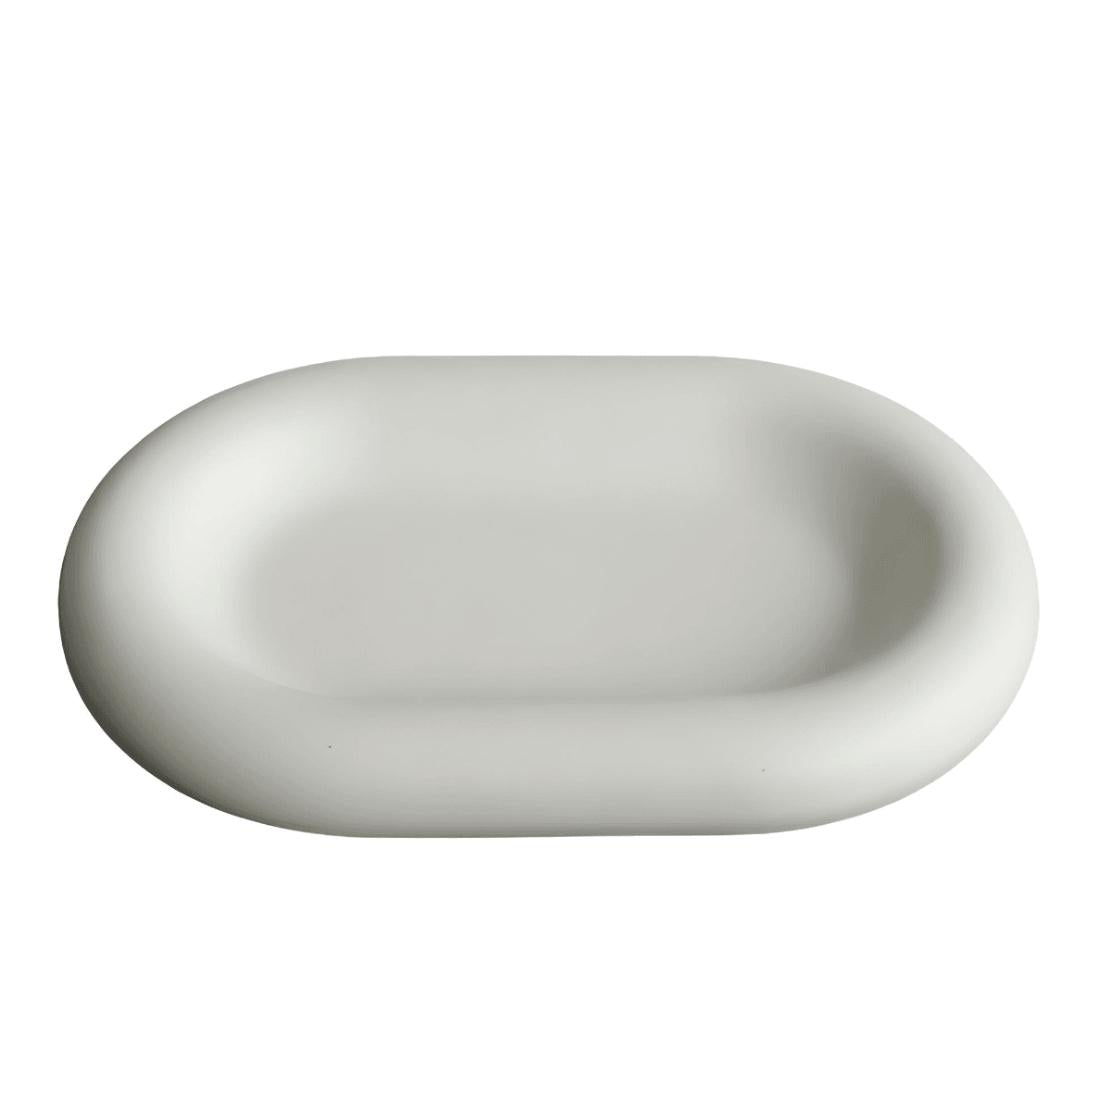 White chunky oval ceramic plate